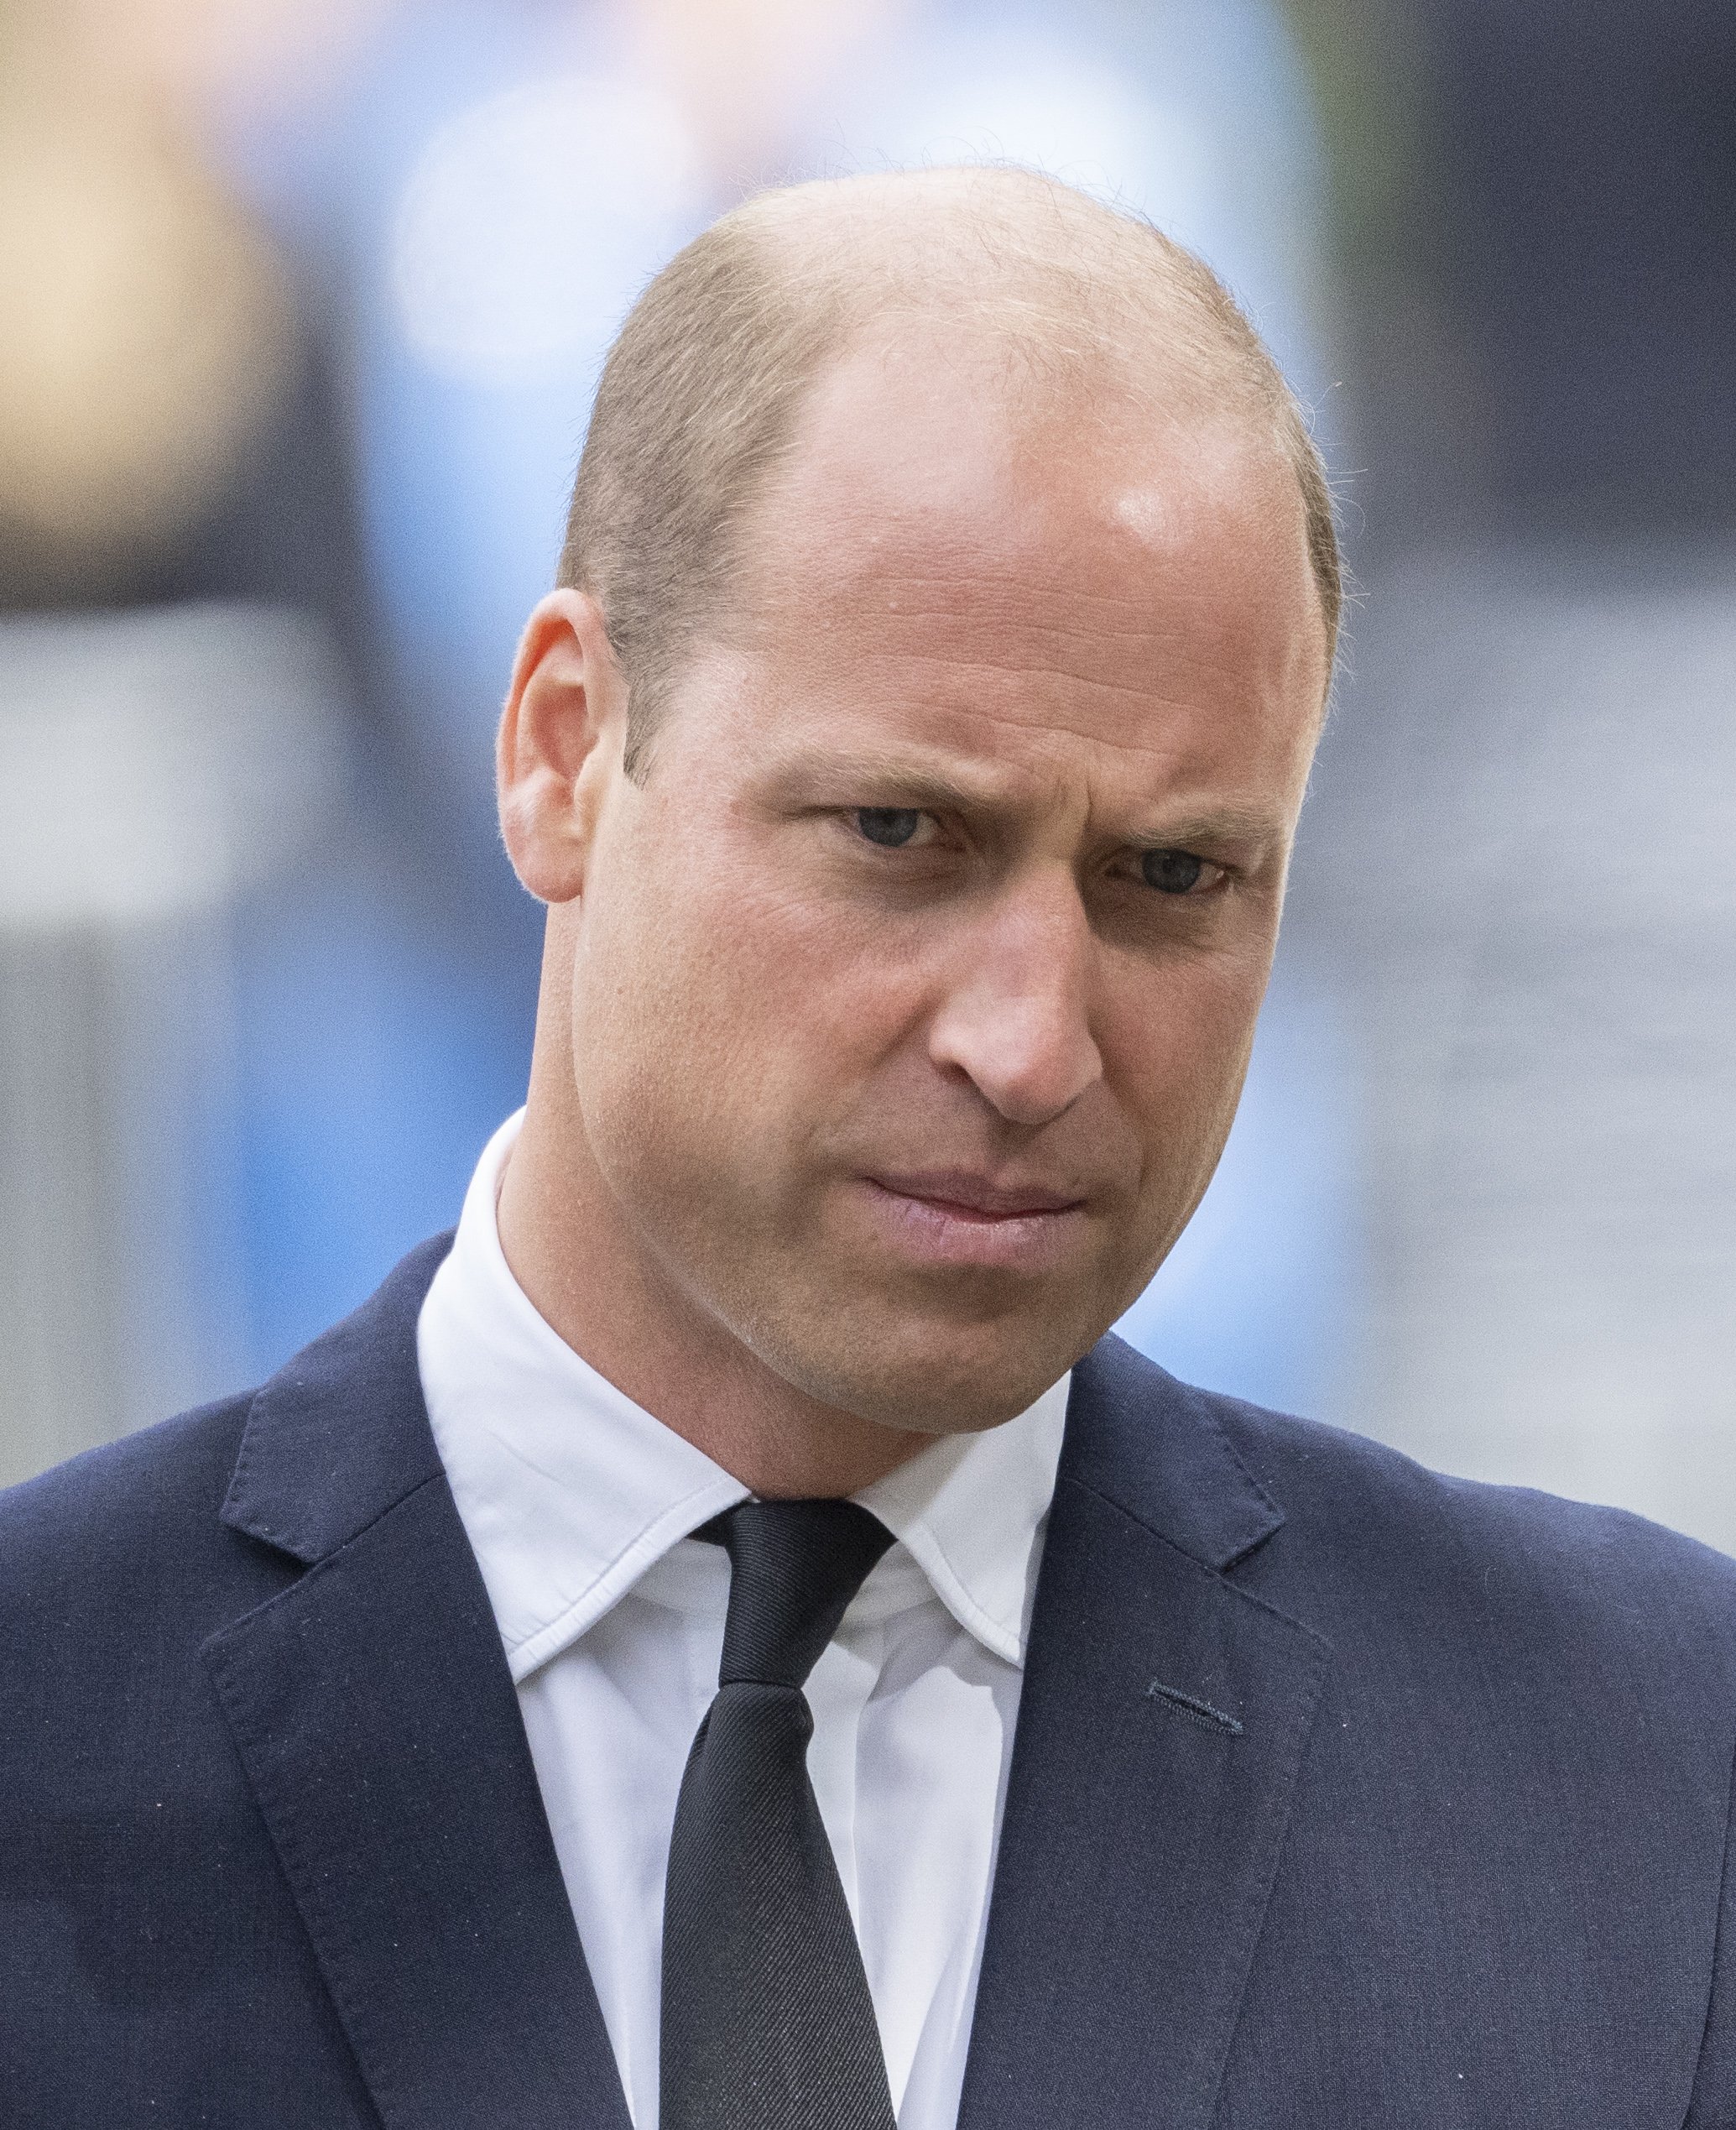 Prinz William, Prinz von Wales, am 15. September 2022 in Sandringham in King's Lynn, England. | Quelle: Getty Images